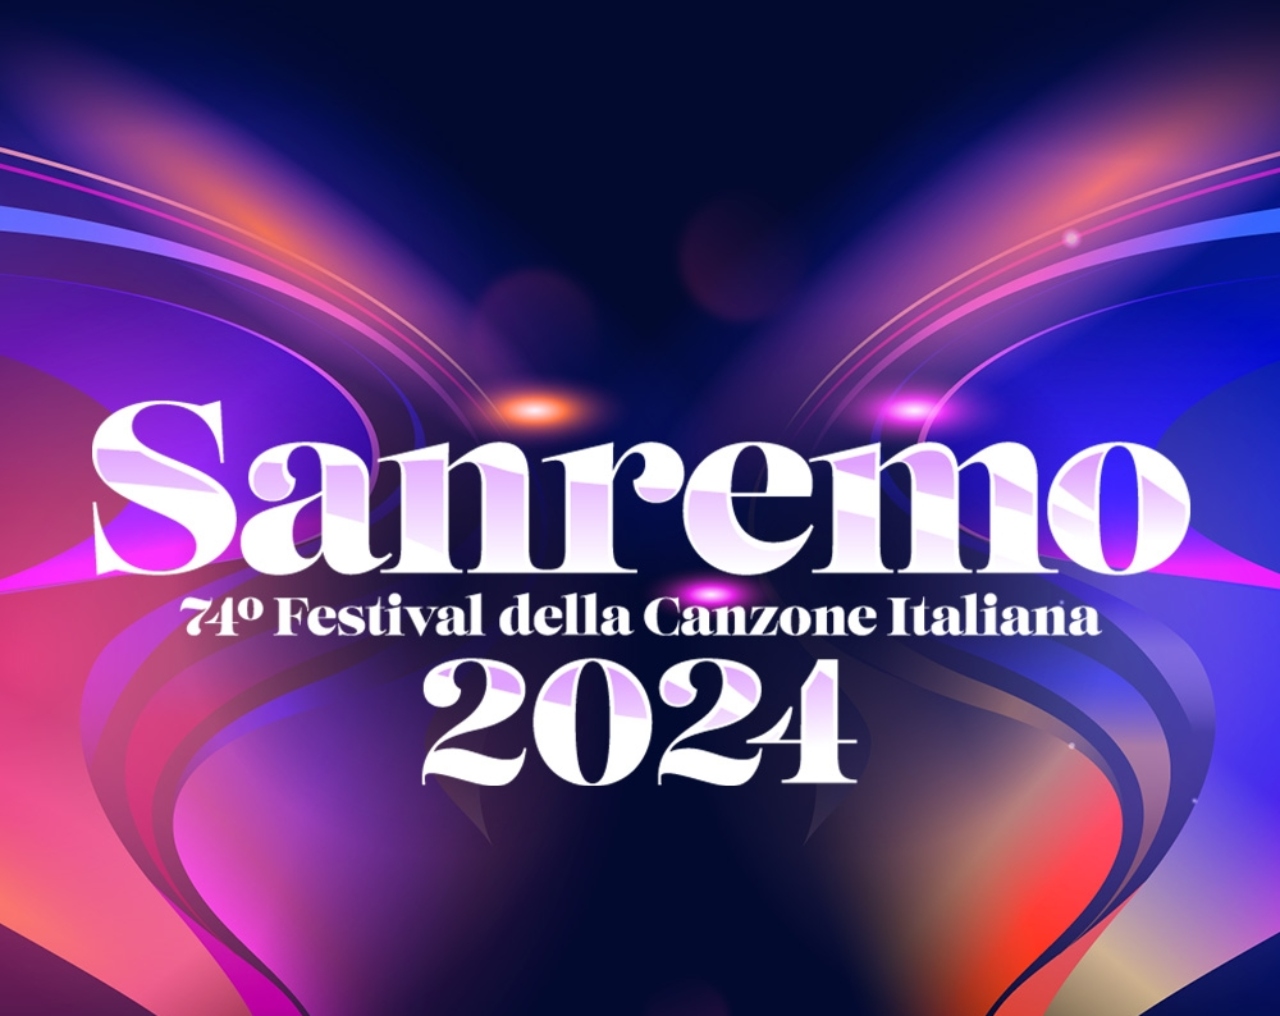 Sanremo 2024 press conference